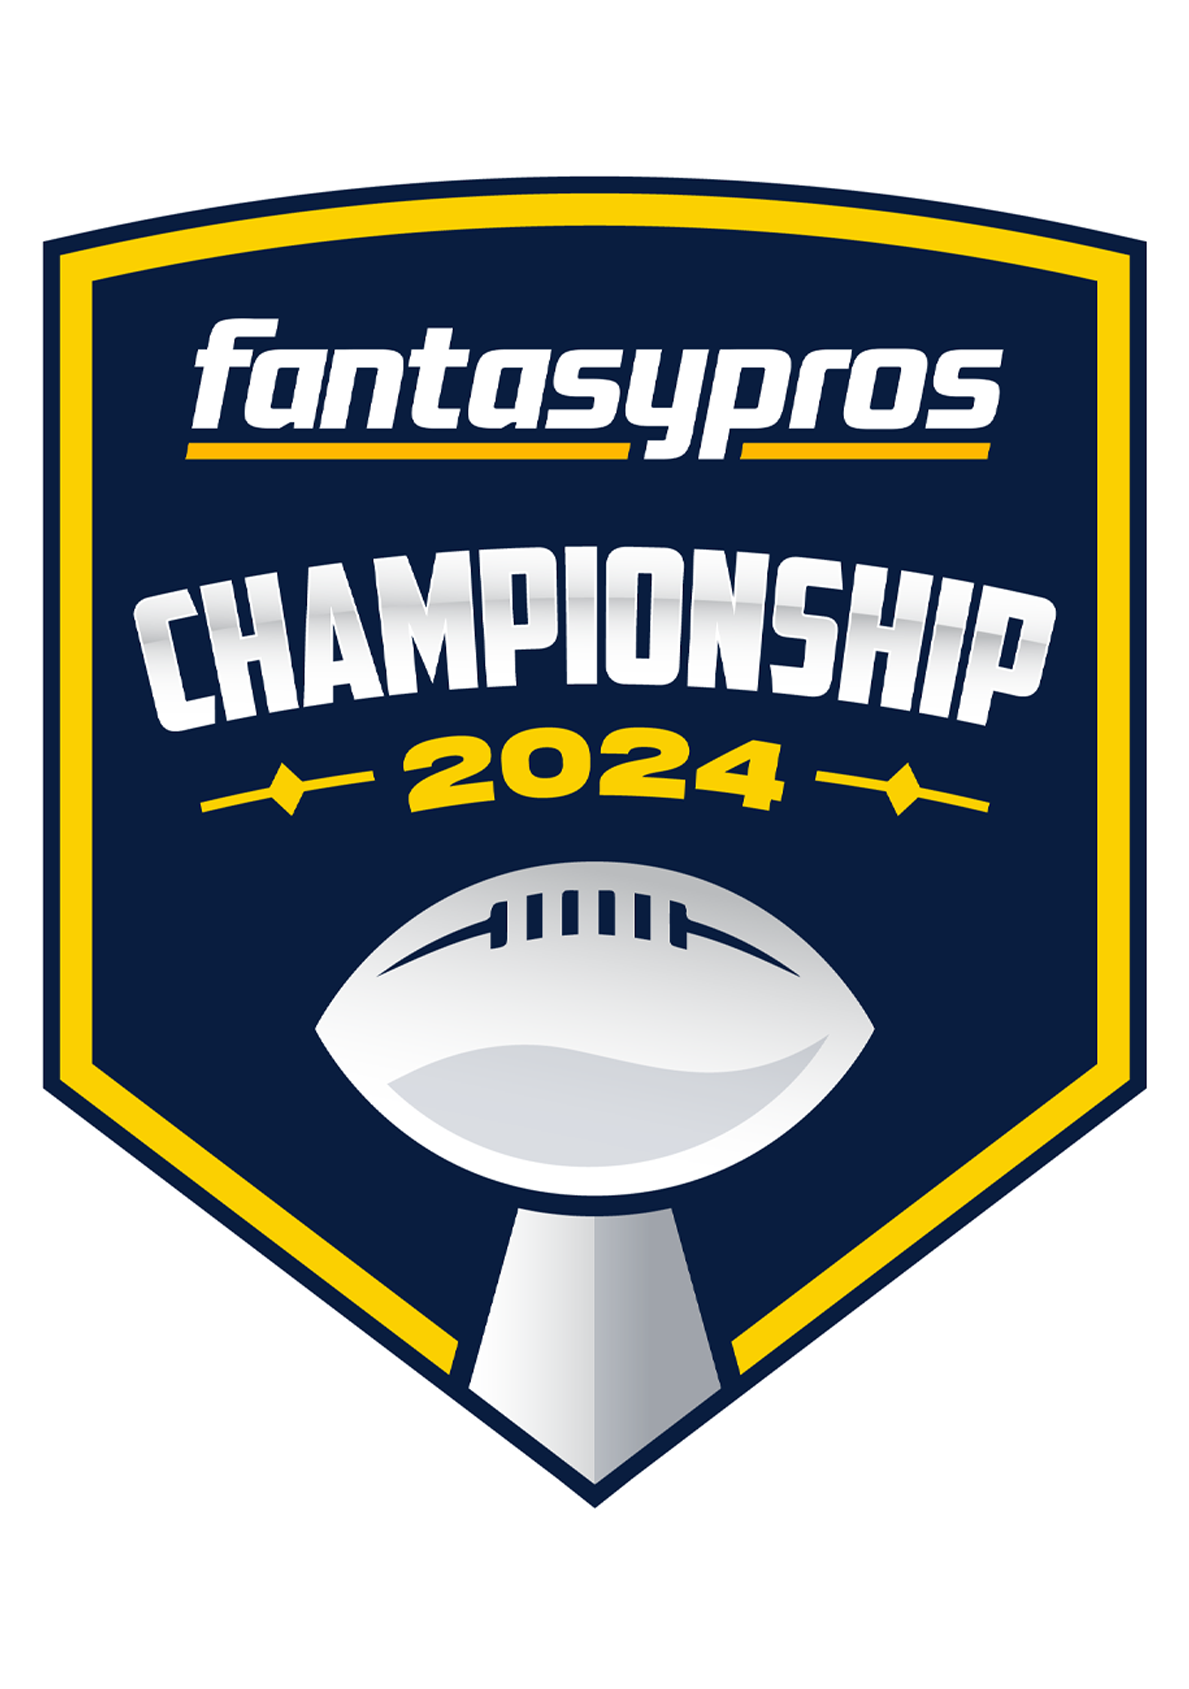 FantasyPros Championship